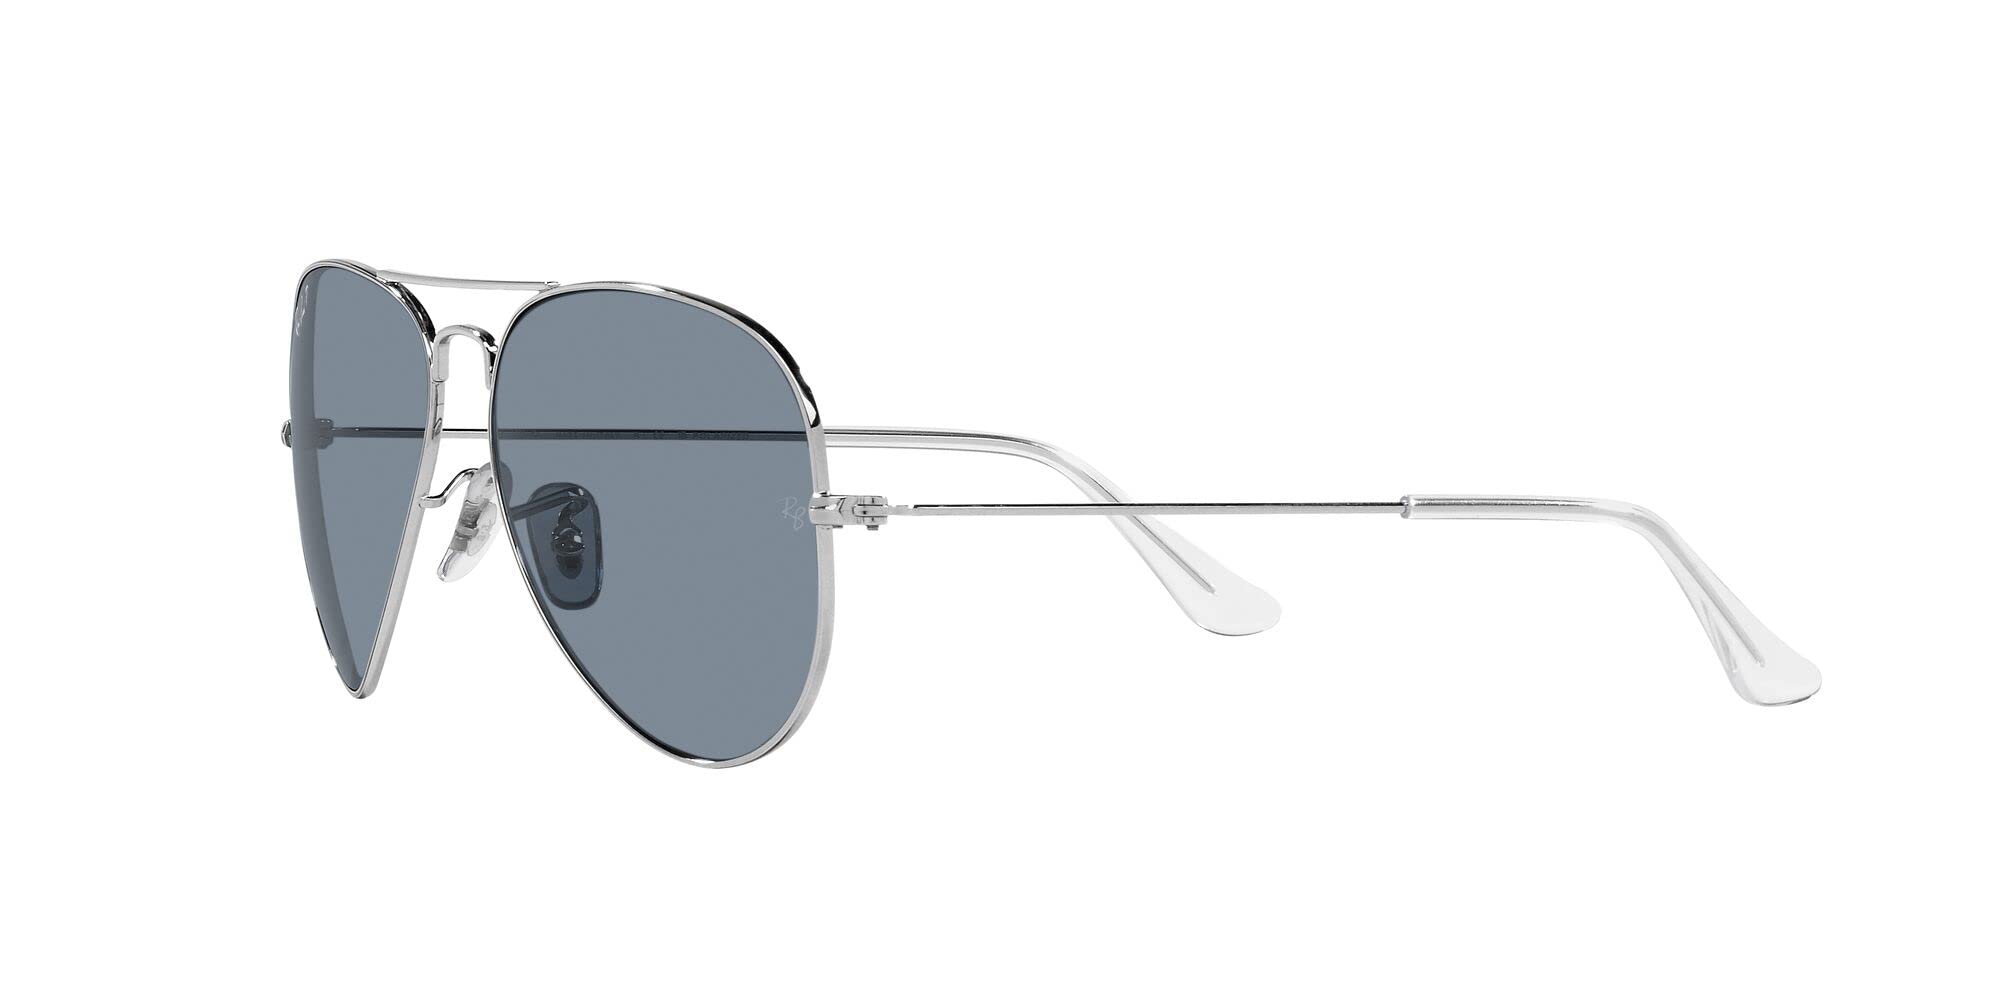 Ray-Ban Rb3025 Classic Polarized Aviator Sunglasses